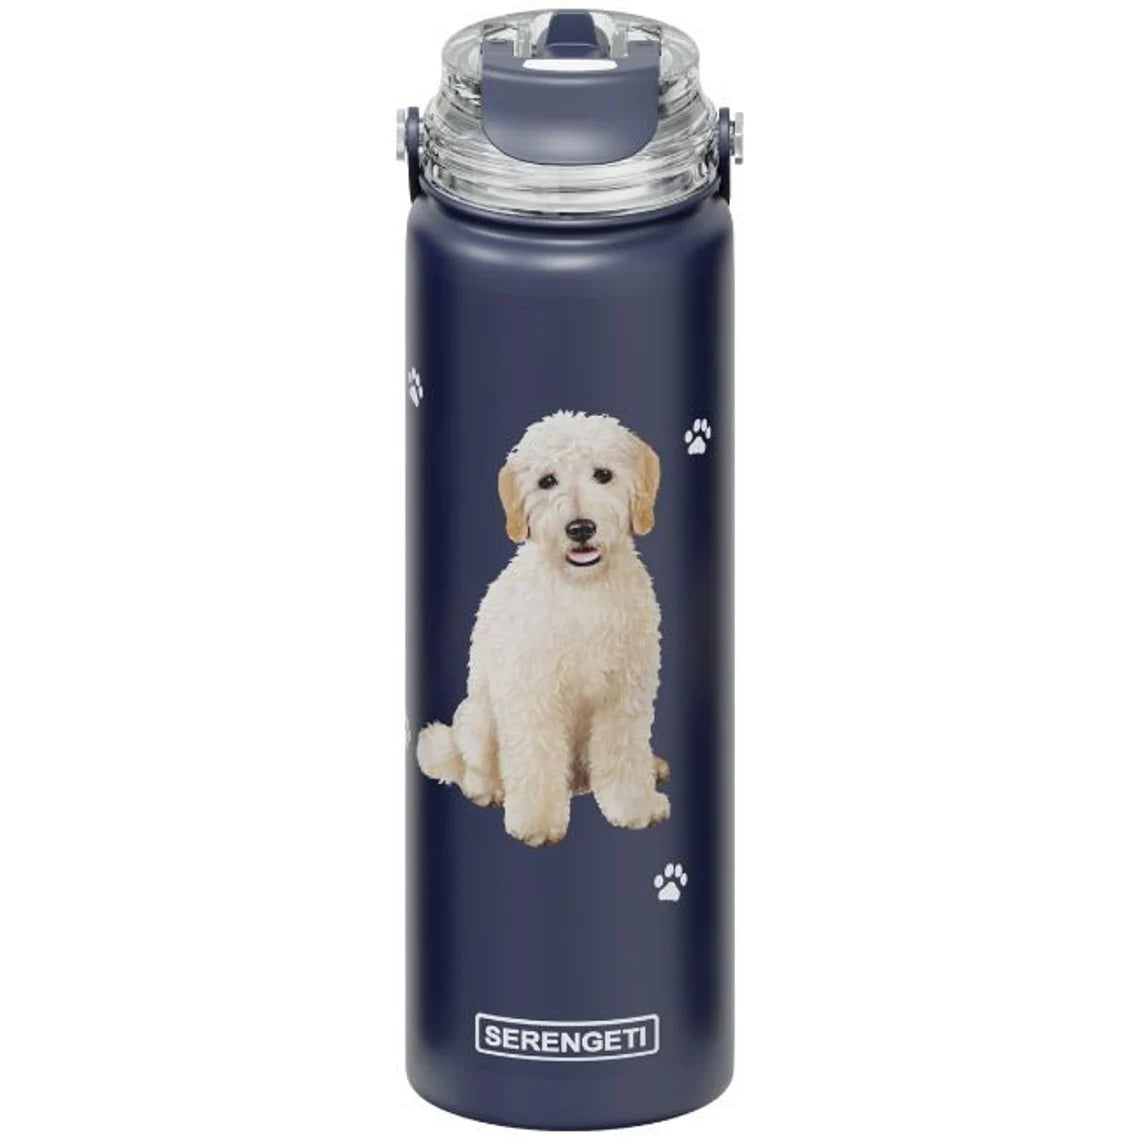 SERENGETI Stainless Steel Water Bottle 24oz - Goldendoodle